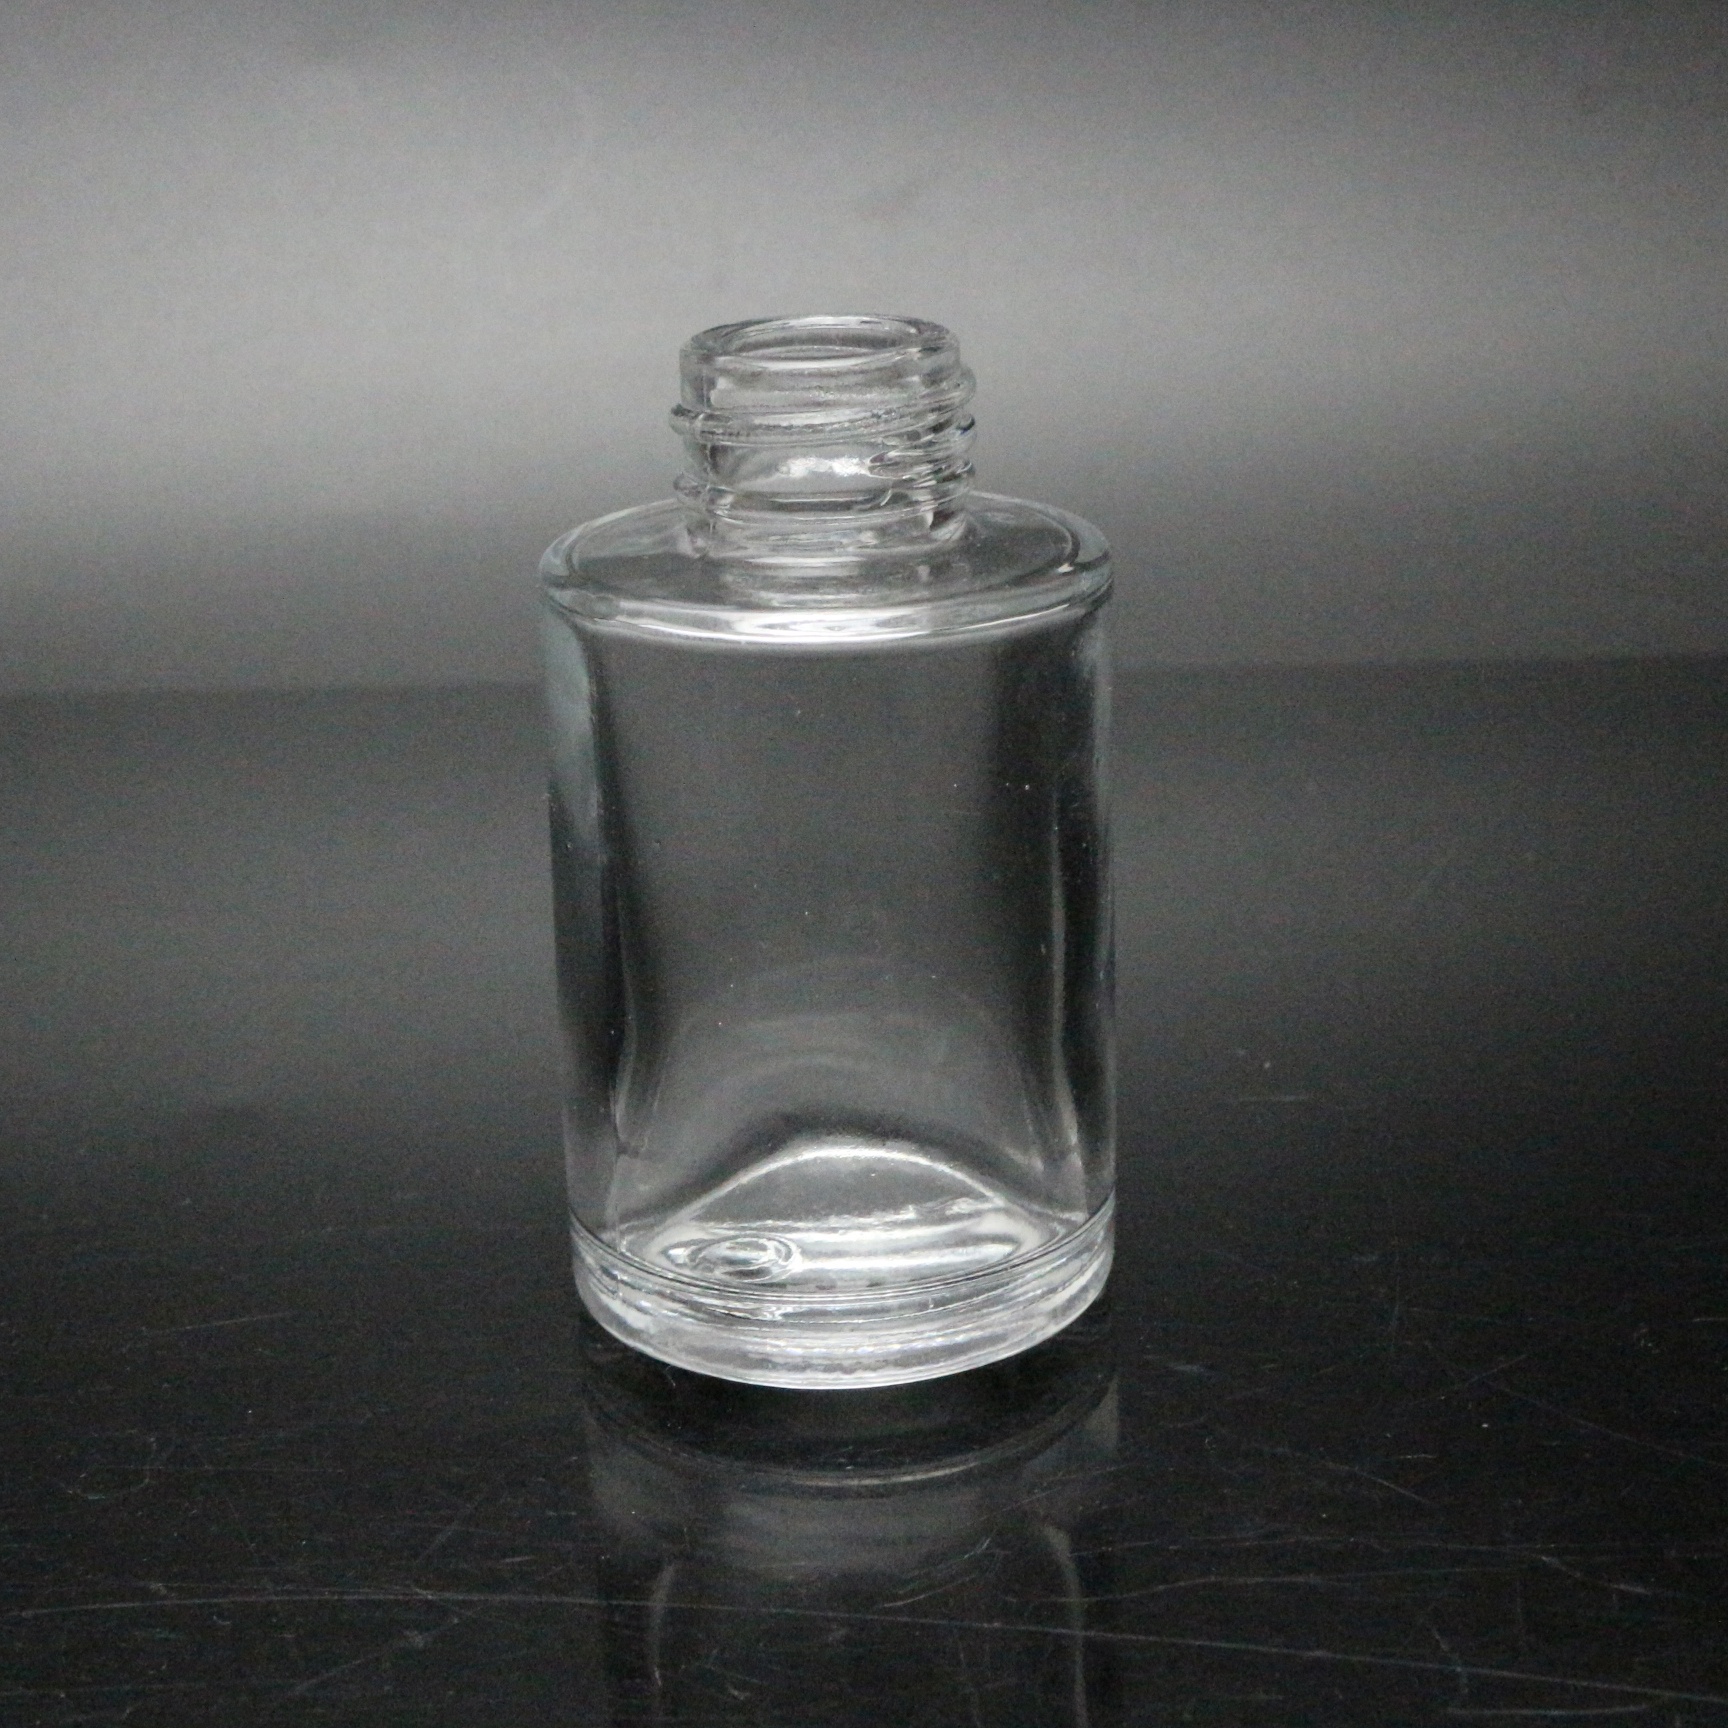 Fragrance Matumizi kwa DIY Replacement Reed Diffuser Fragrance Glass Diffuser Chupa kwa Caps 120ml 4.06 Ounce Round